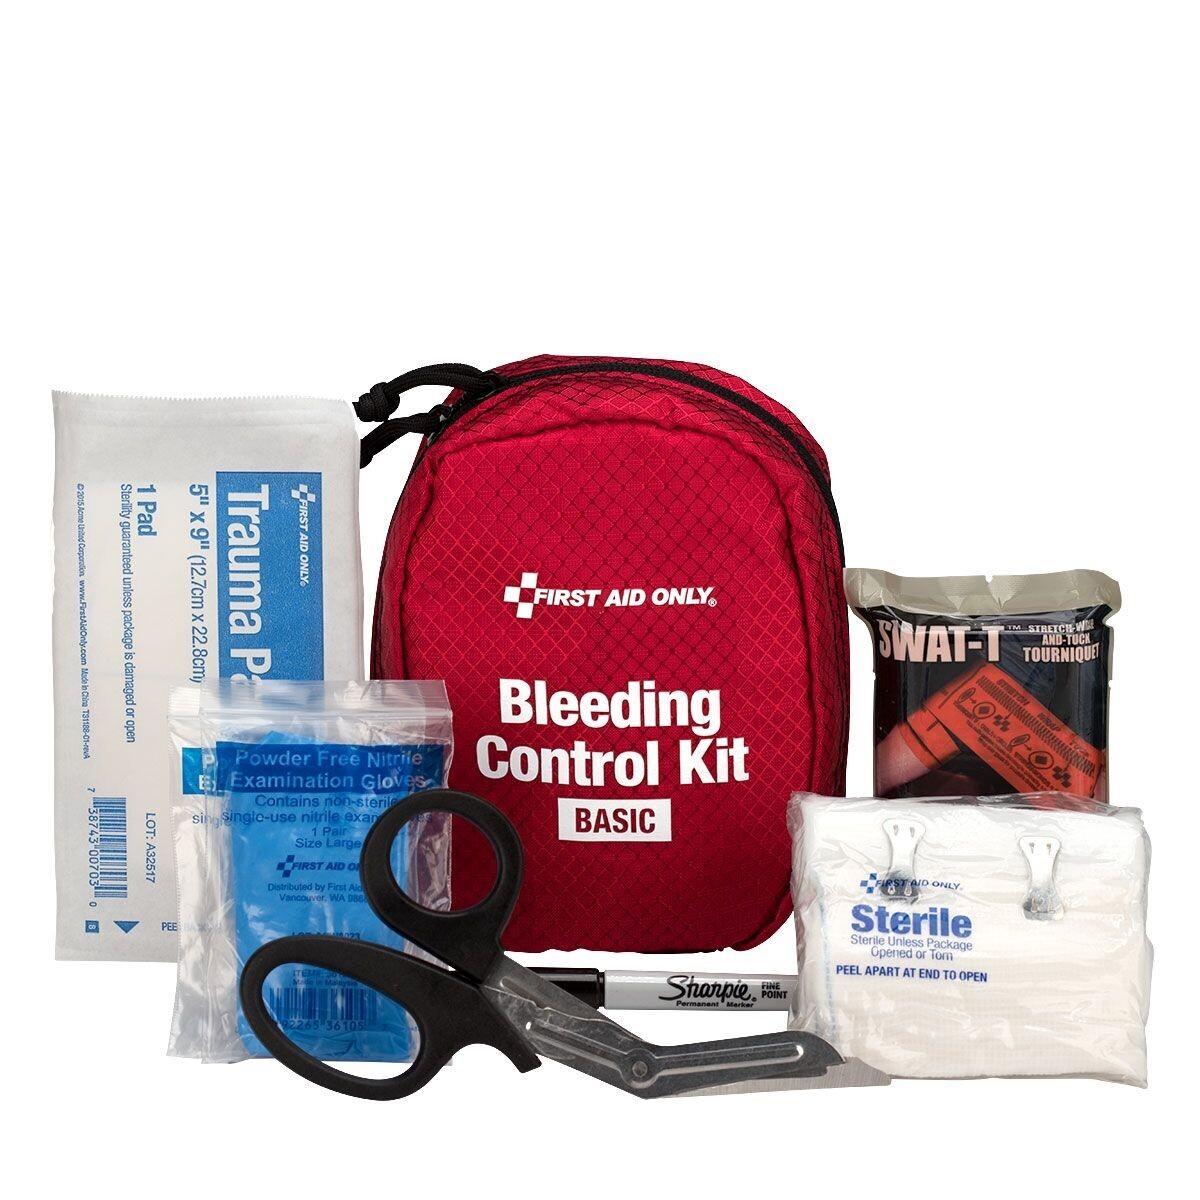 Bleeding Control Kit - Basic, Fabric Case